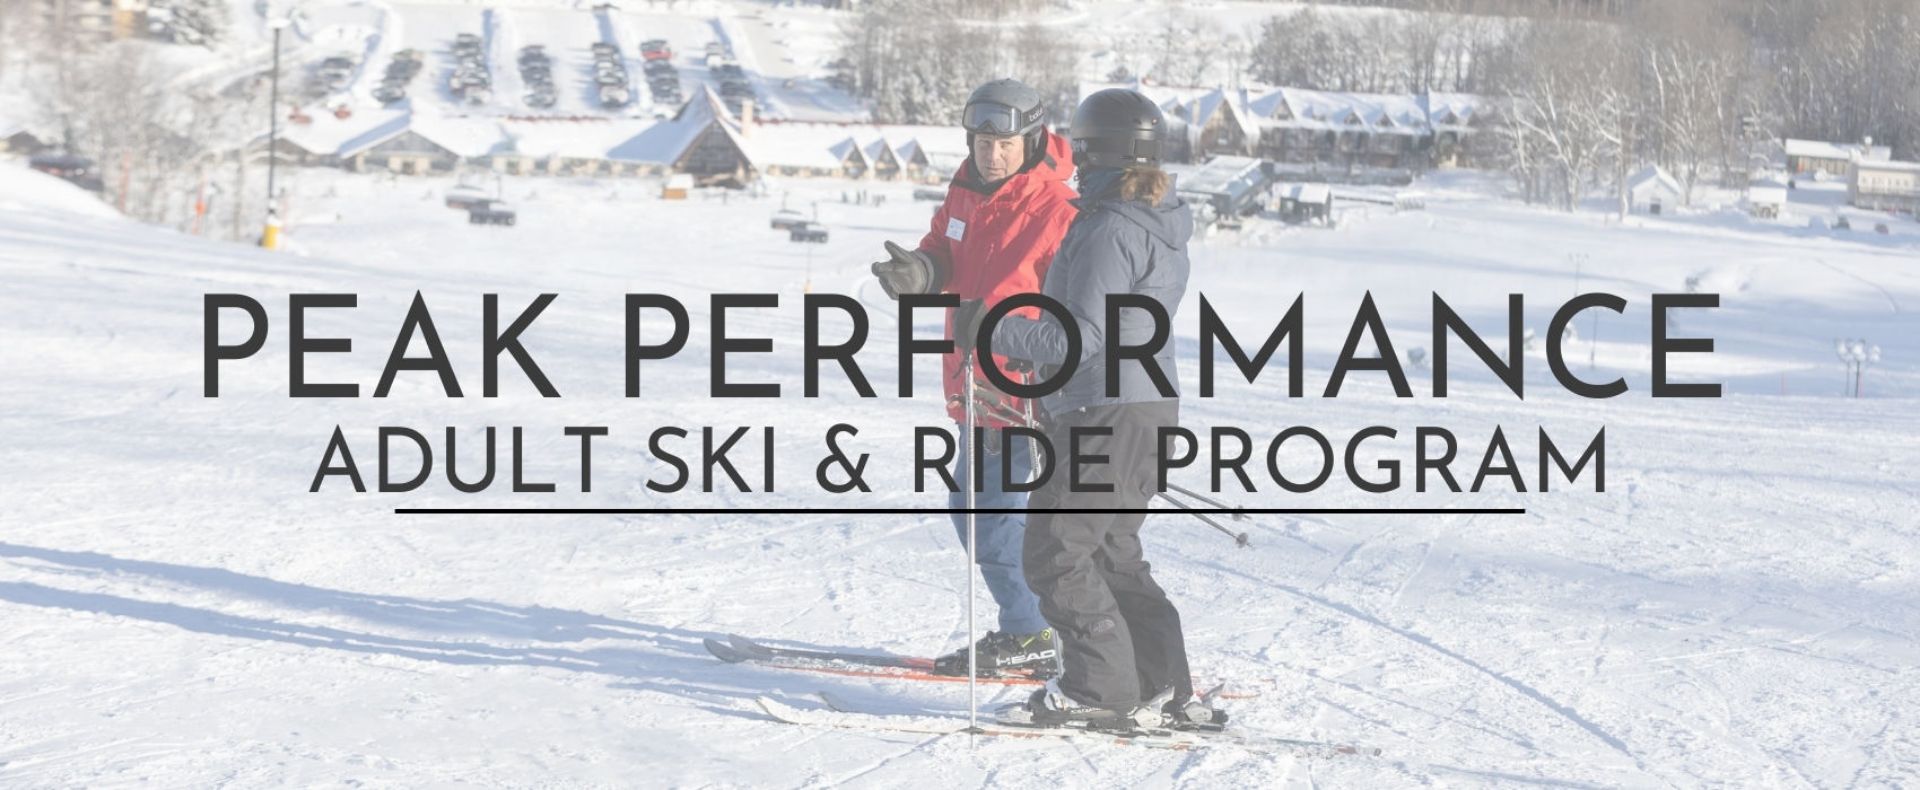 Peak Performance Adult Ski and Ride Program at The Highlands